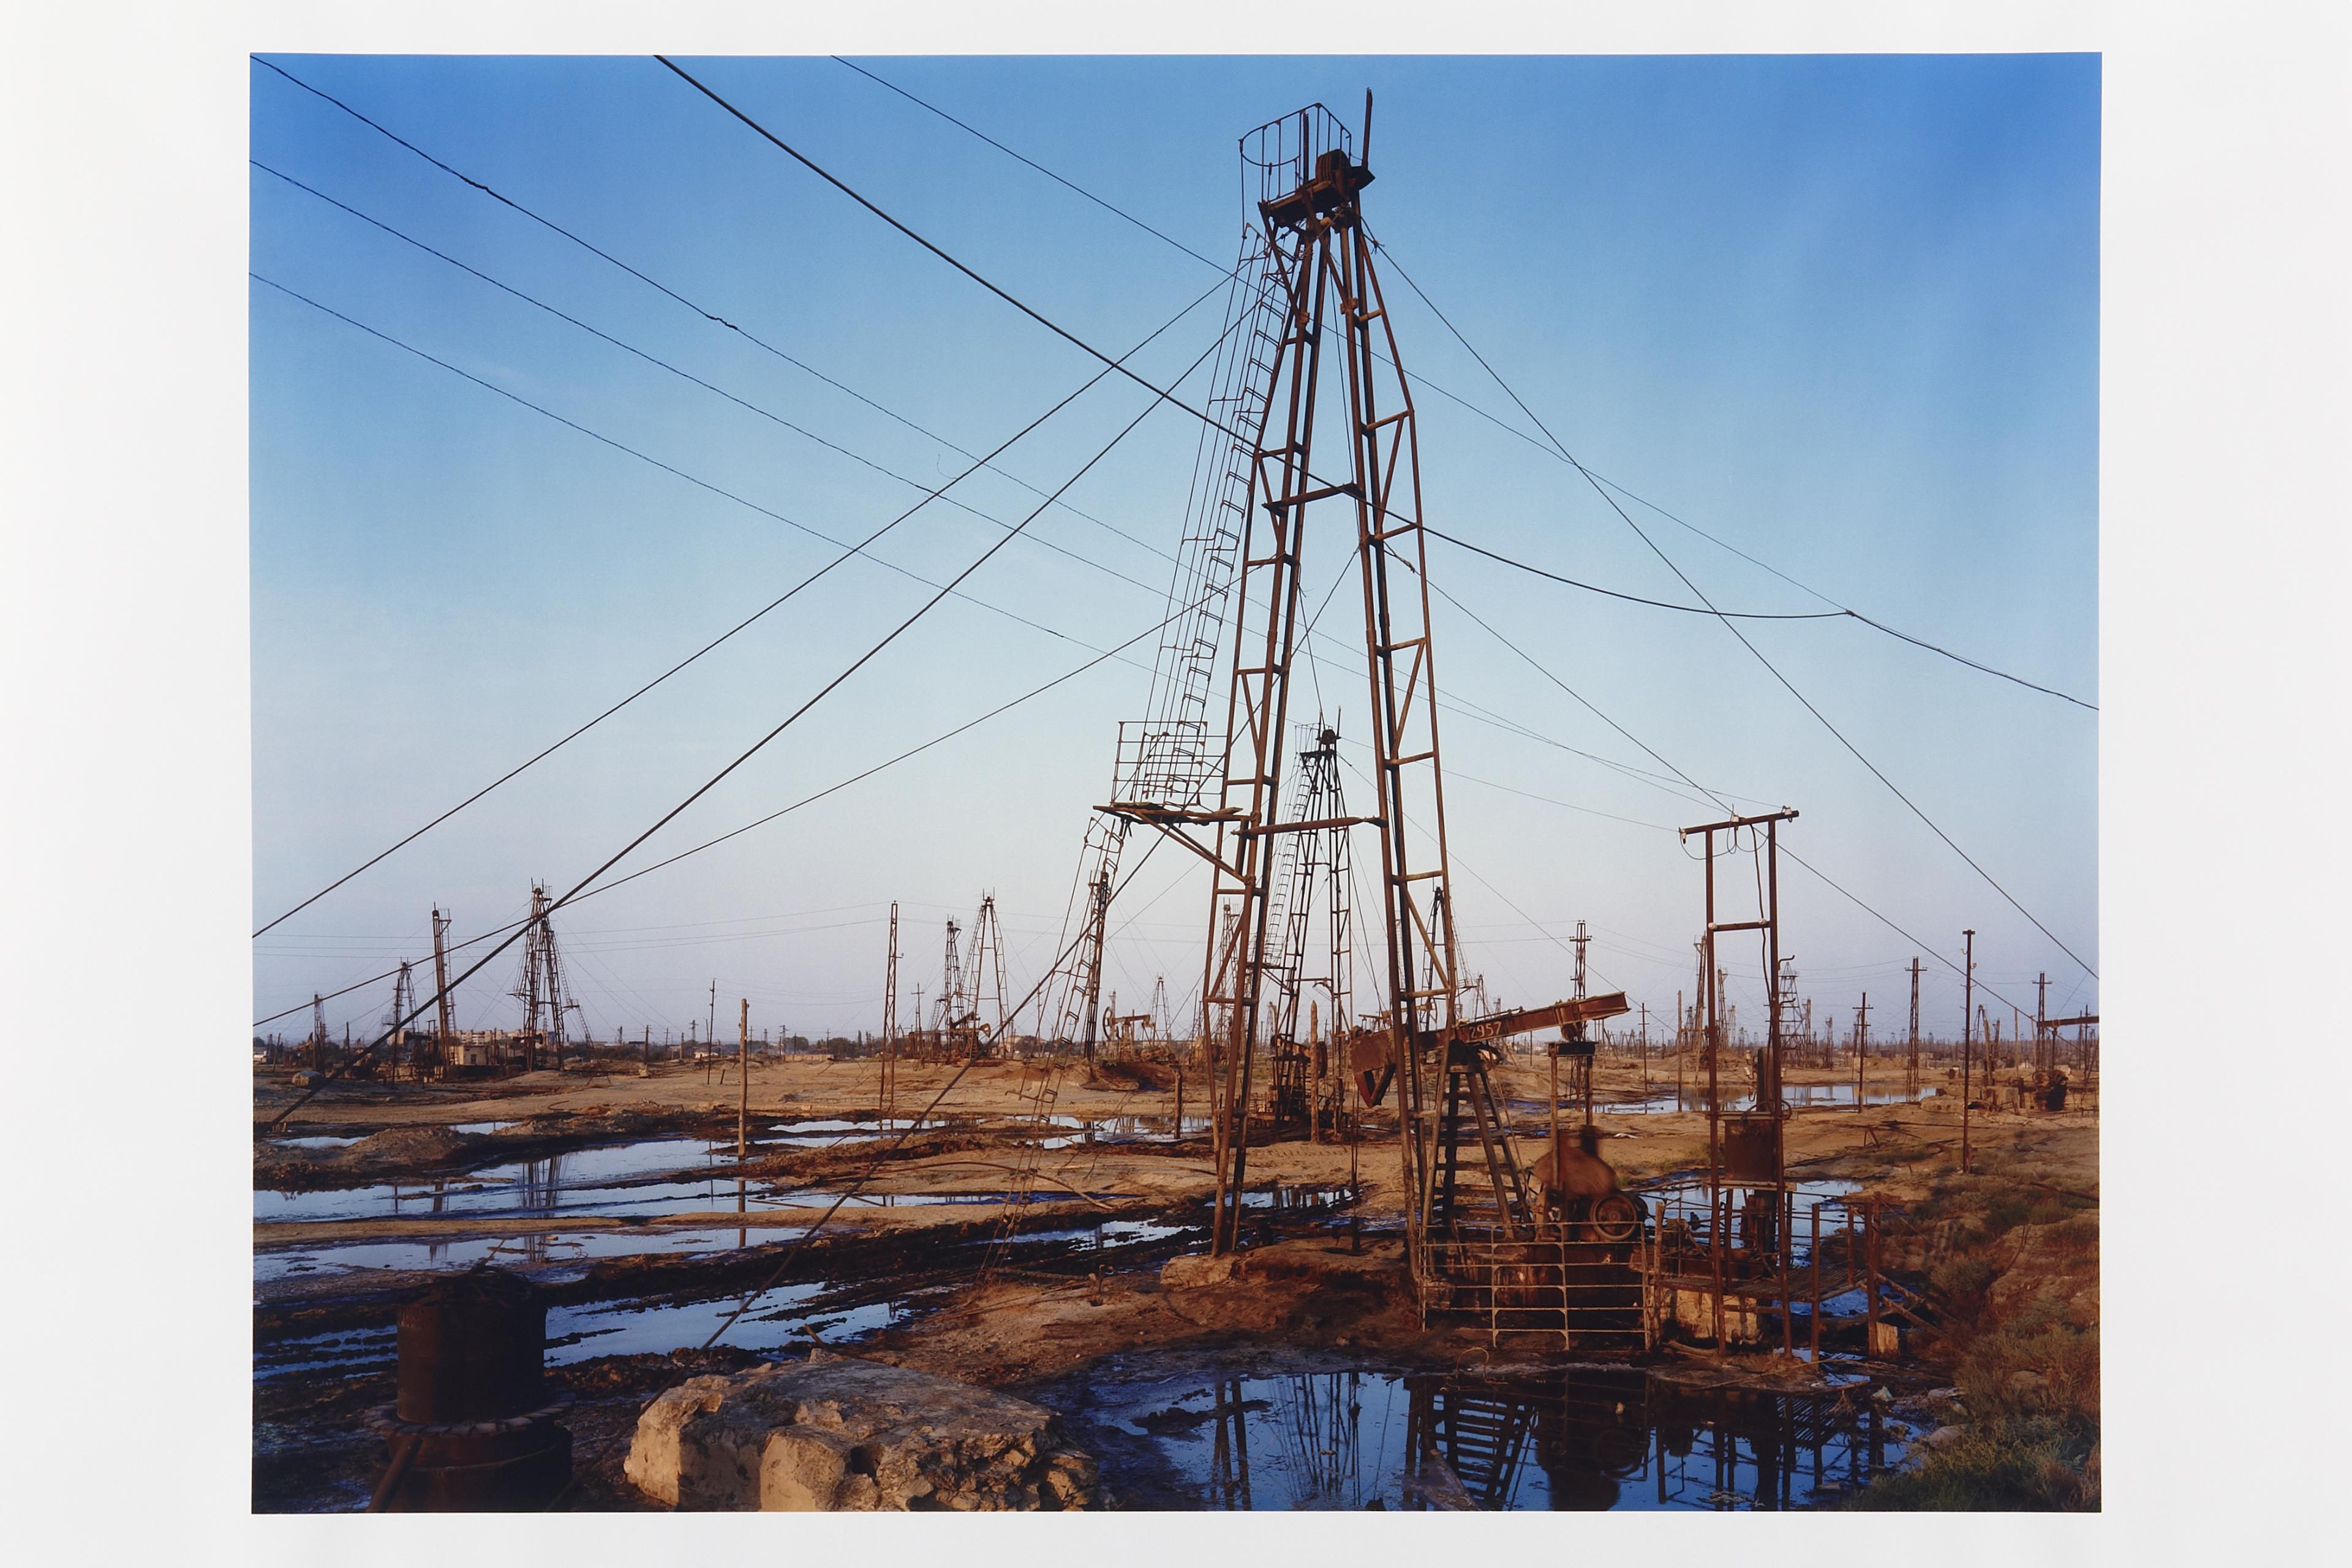 The Old Oil Field, Baku, Azerbaijan